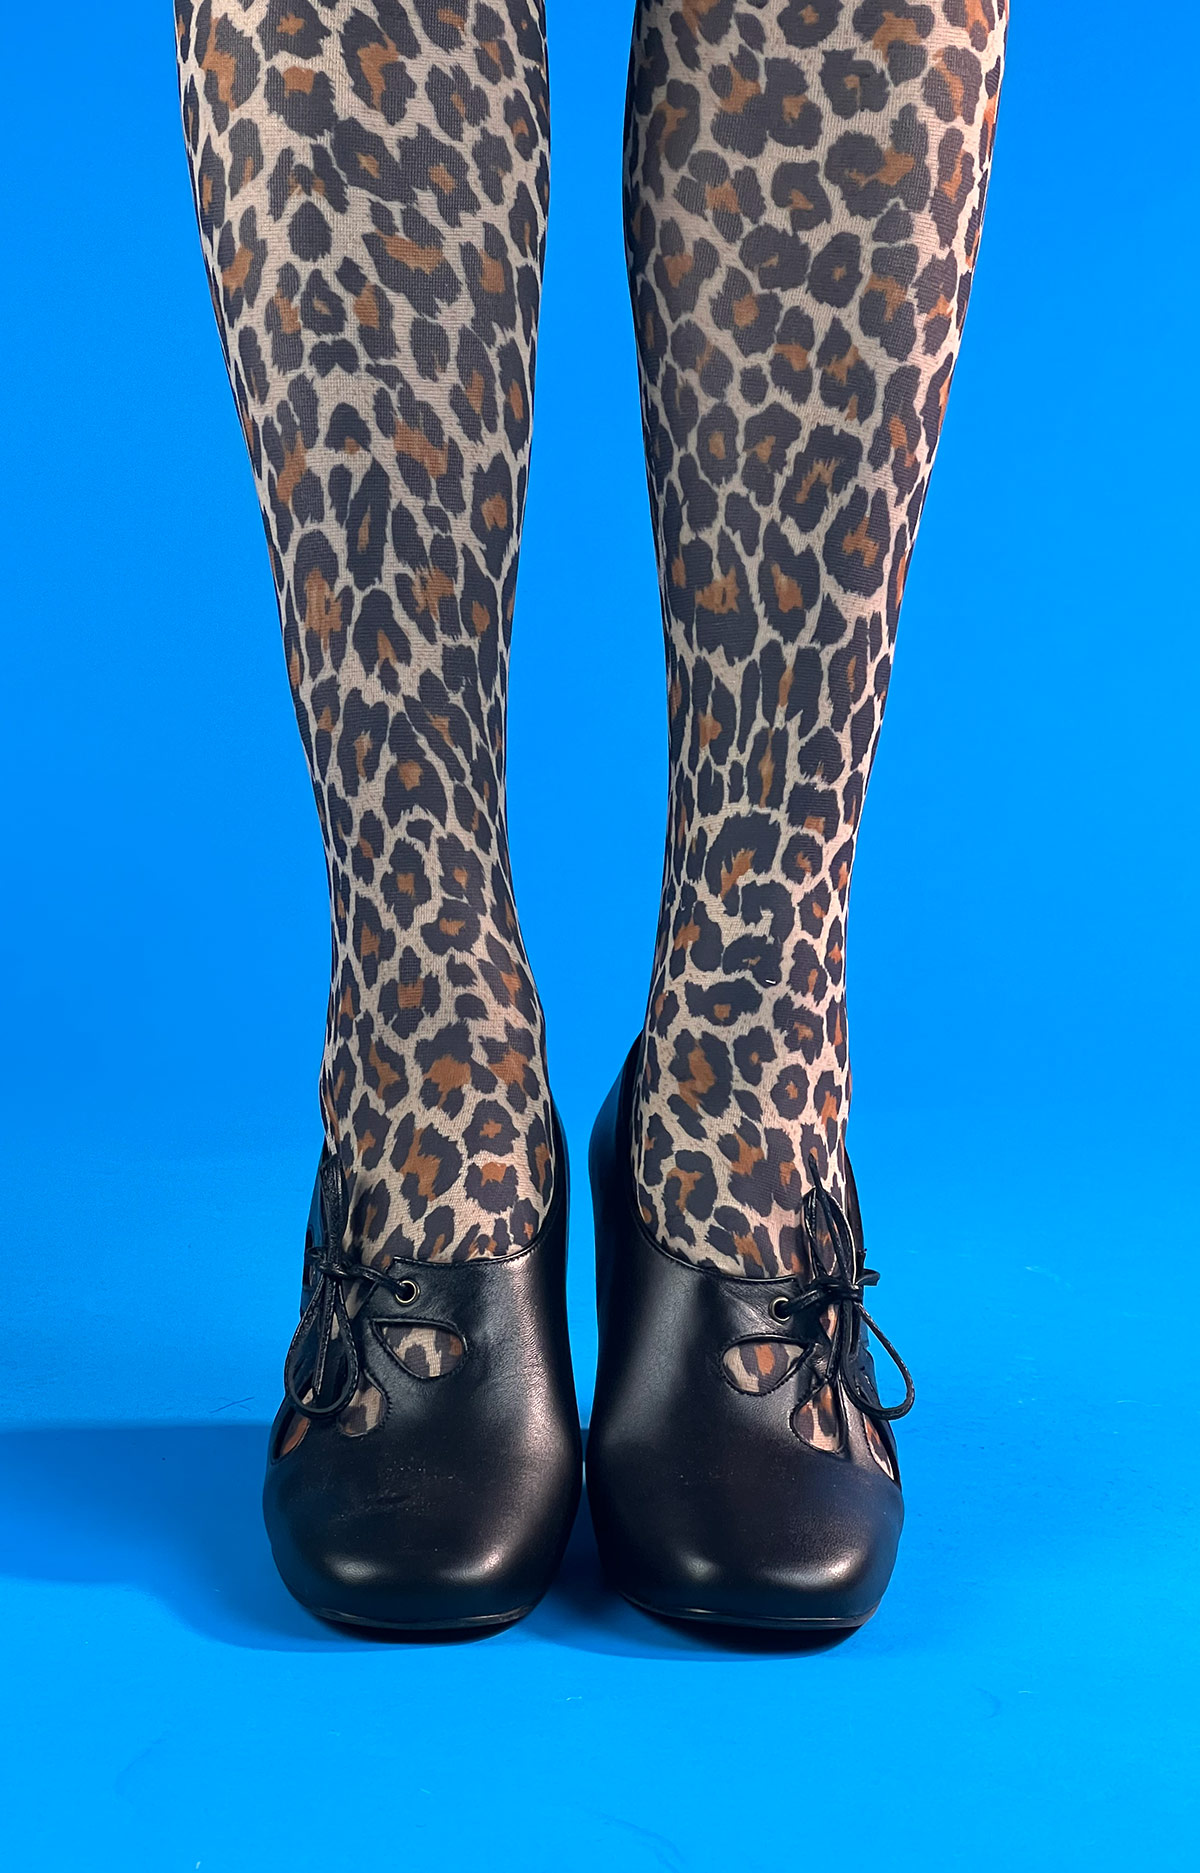 Leopard Print Tights- ladies vintage retro 60s – 70s style – Mod Shoes